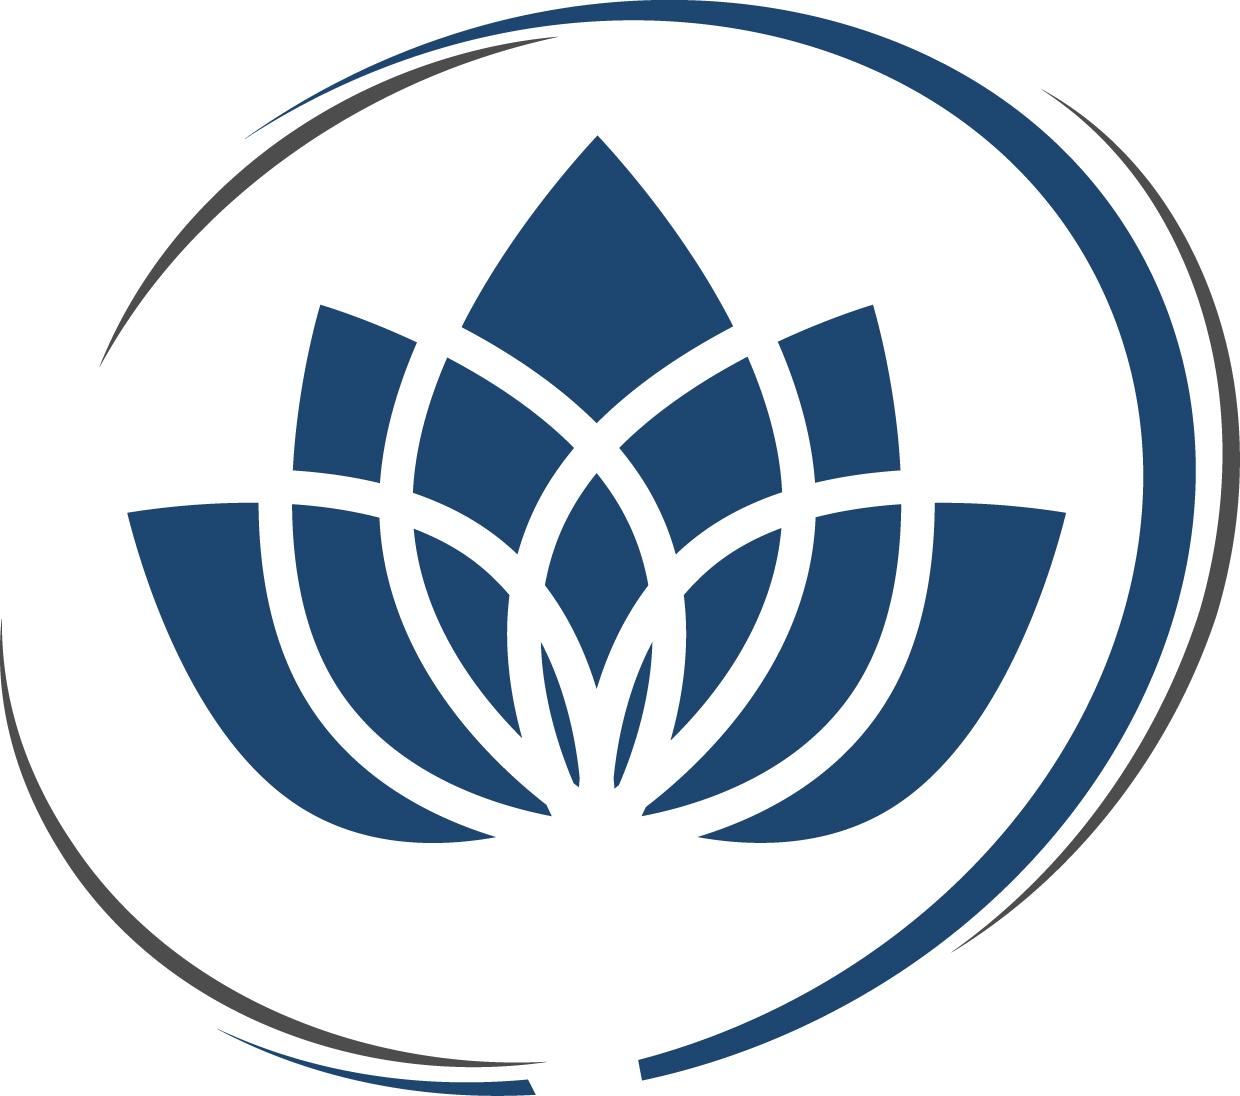 Navy blue lotus symbol as the logo of Lotus Professional College